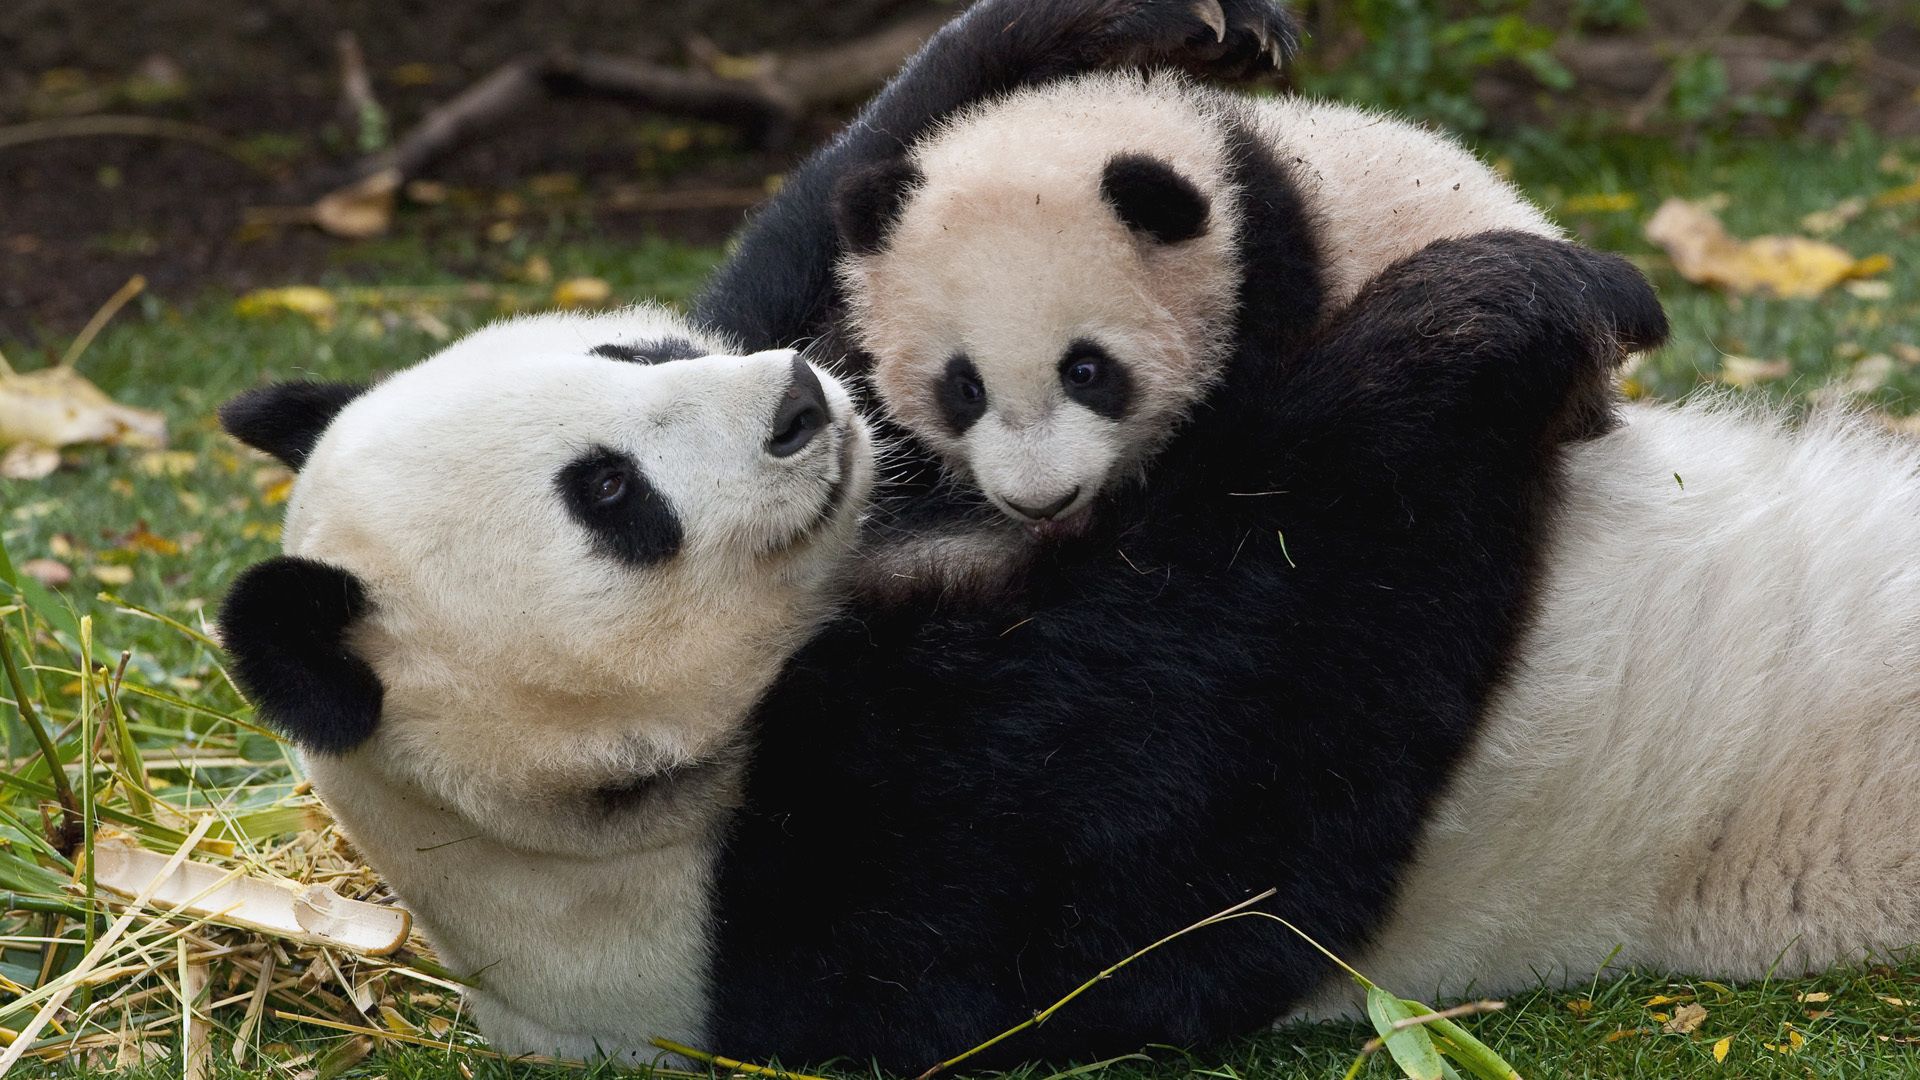 pair, animals, grass, young, couple, joey, play, panda, embrace